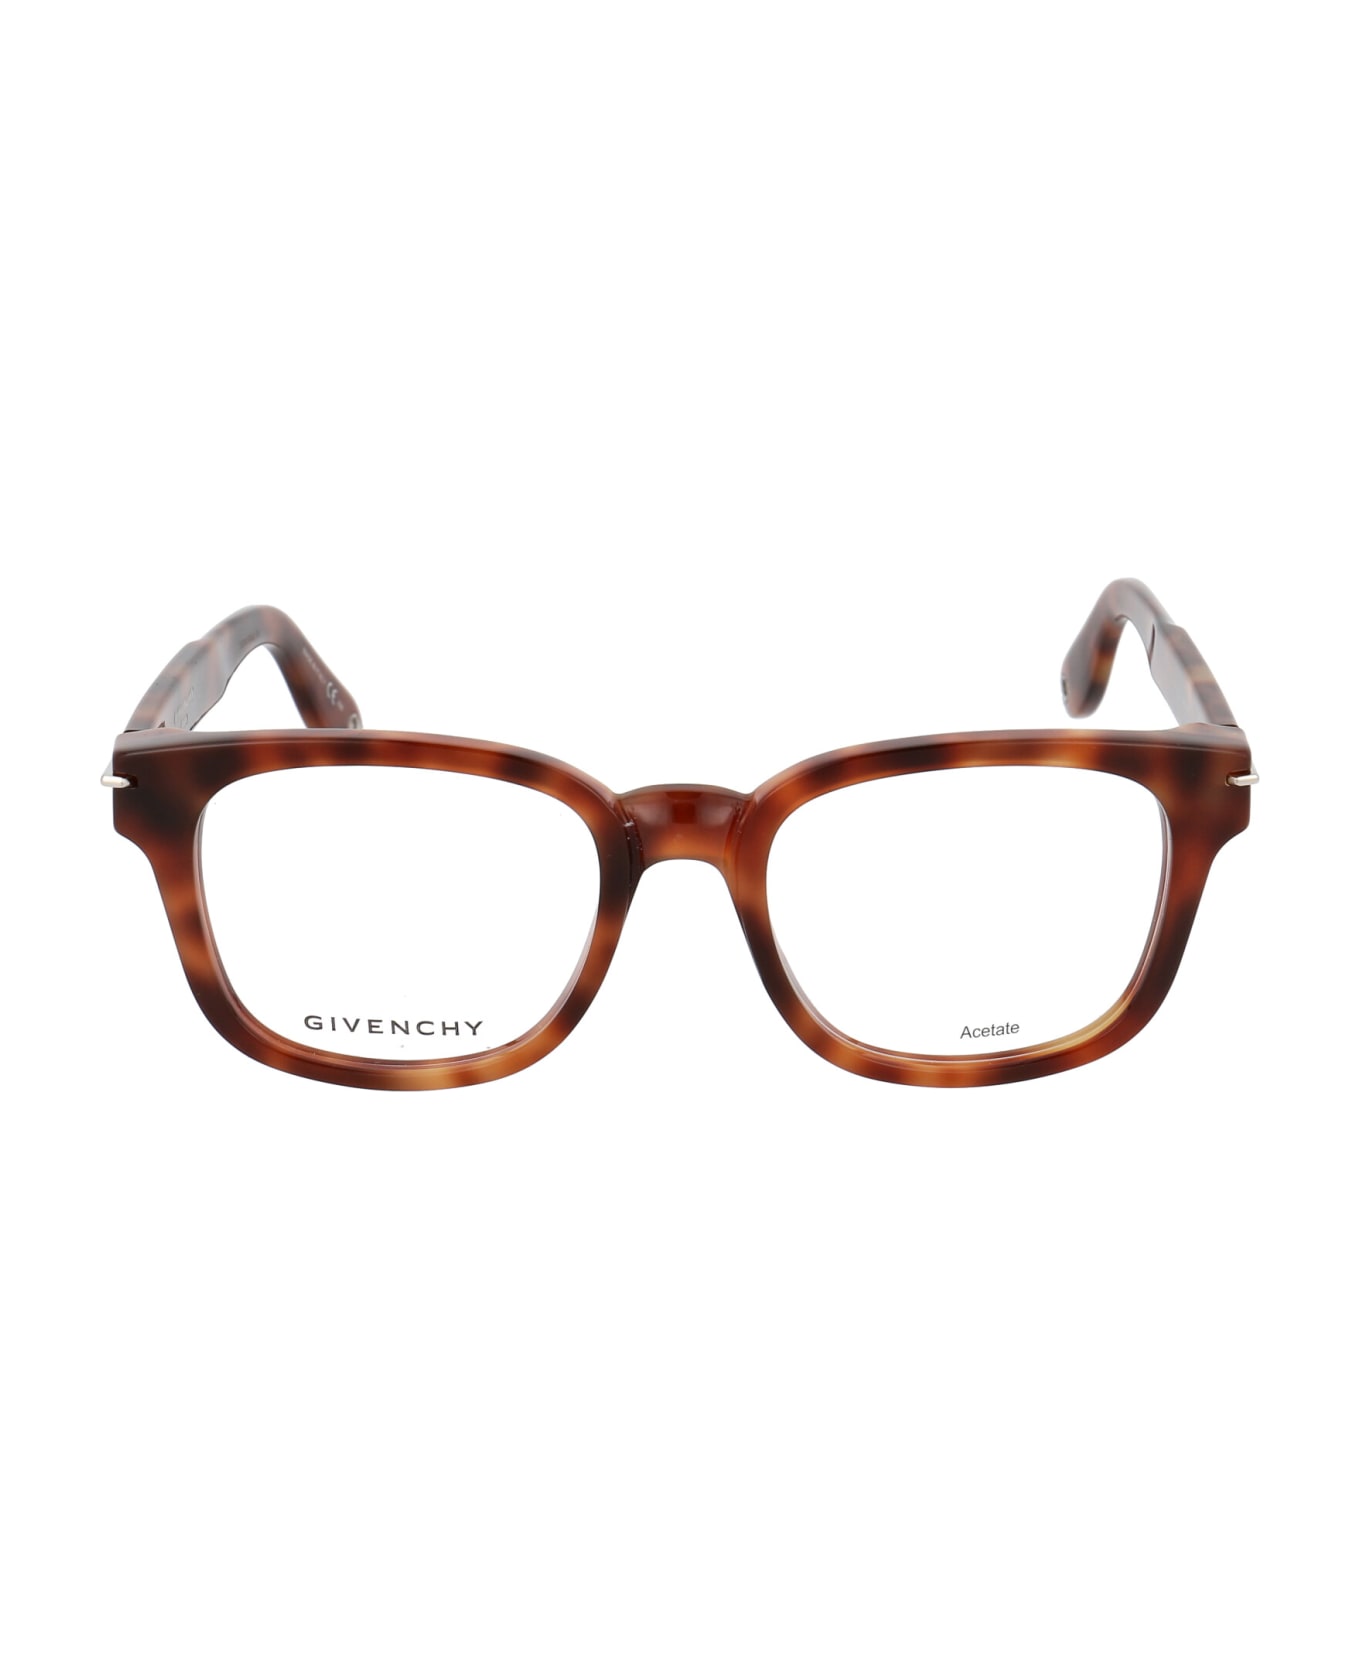 Givenchy Eyewear Gv 0001 Glasses - VMB HAVANA